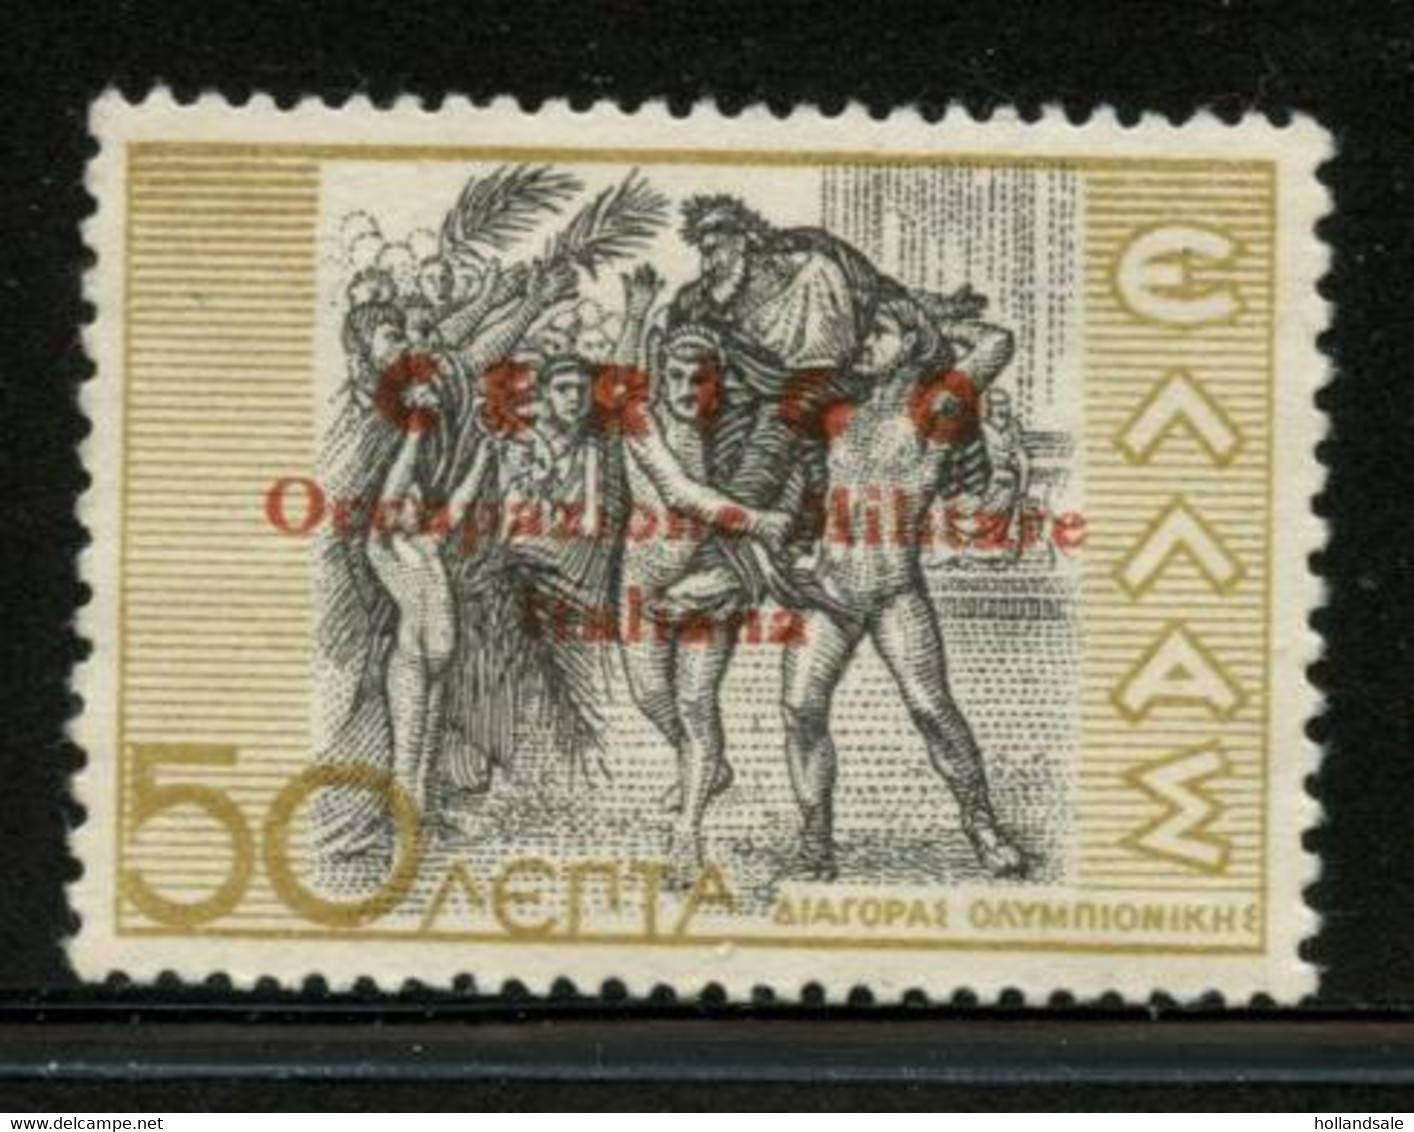 GREECE / CERIGO ITALIEN OCCUPATION - Unused Stamp Of Greece With Opt.  ISOLE JONI. - Emissions Locales